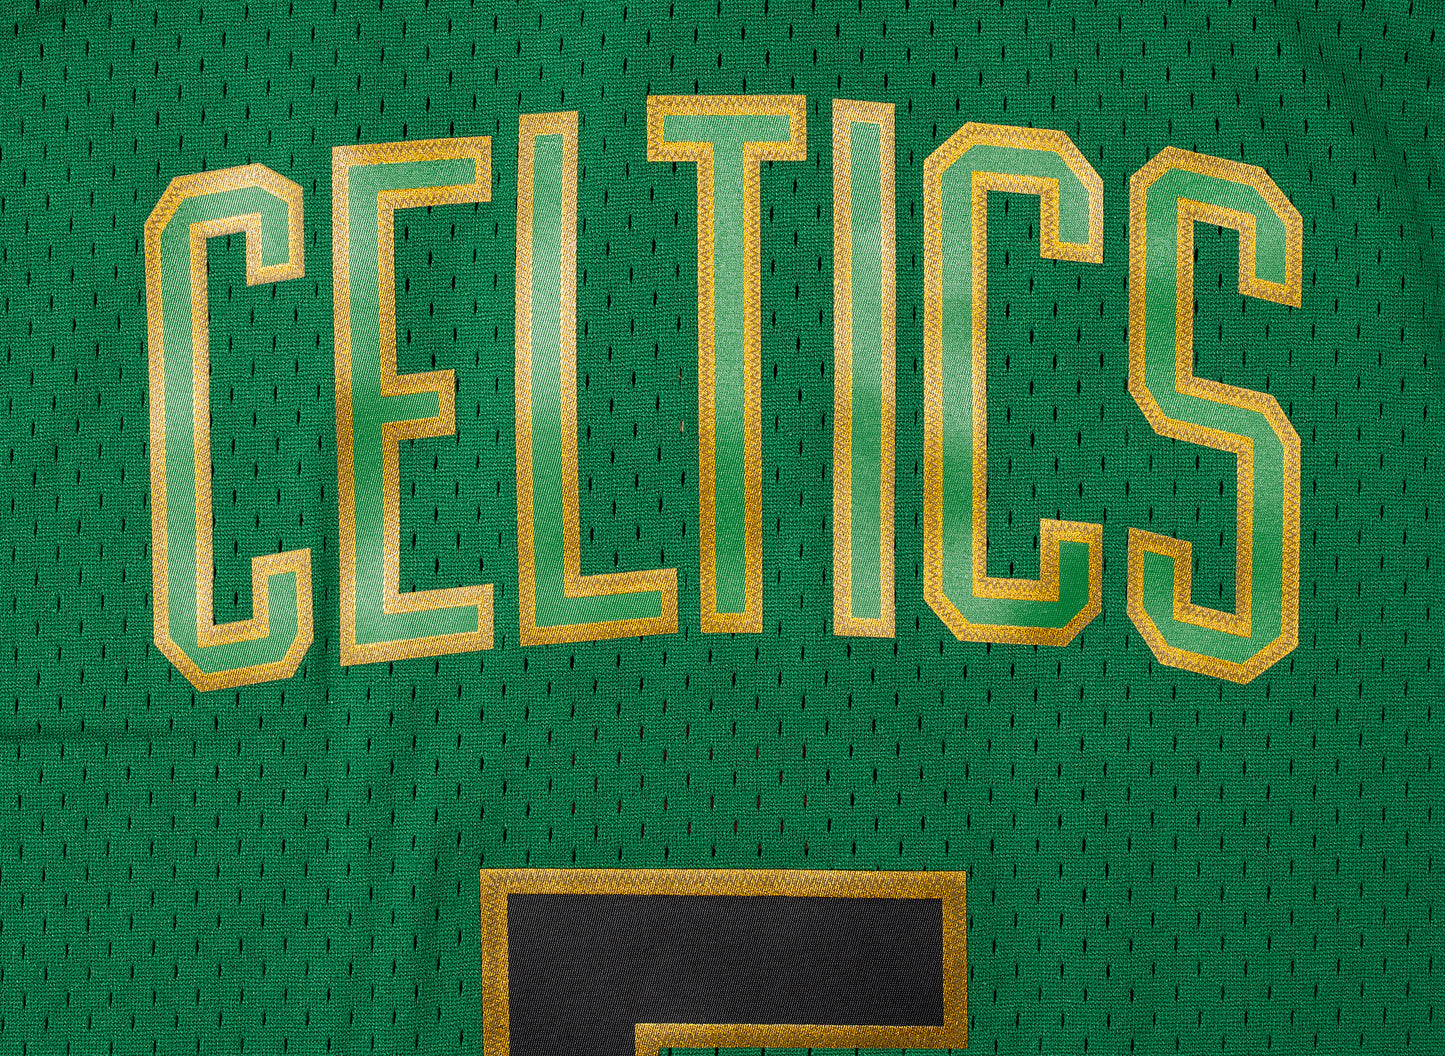 Mitchell & Ness NBA Swingman Kevin Garnett 95 Celtics Jersey